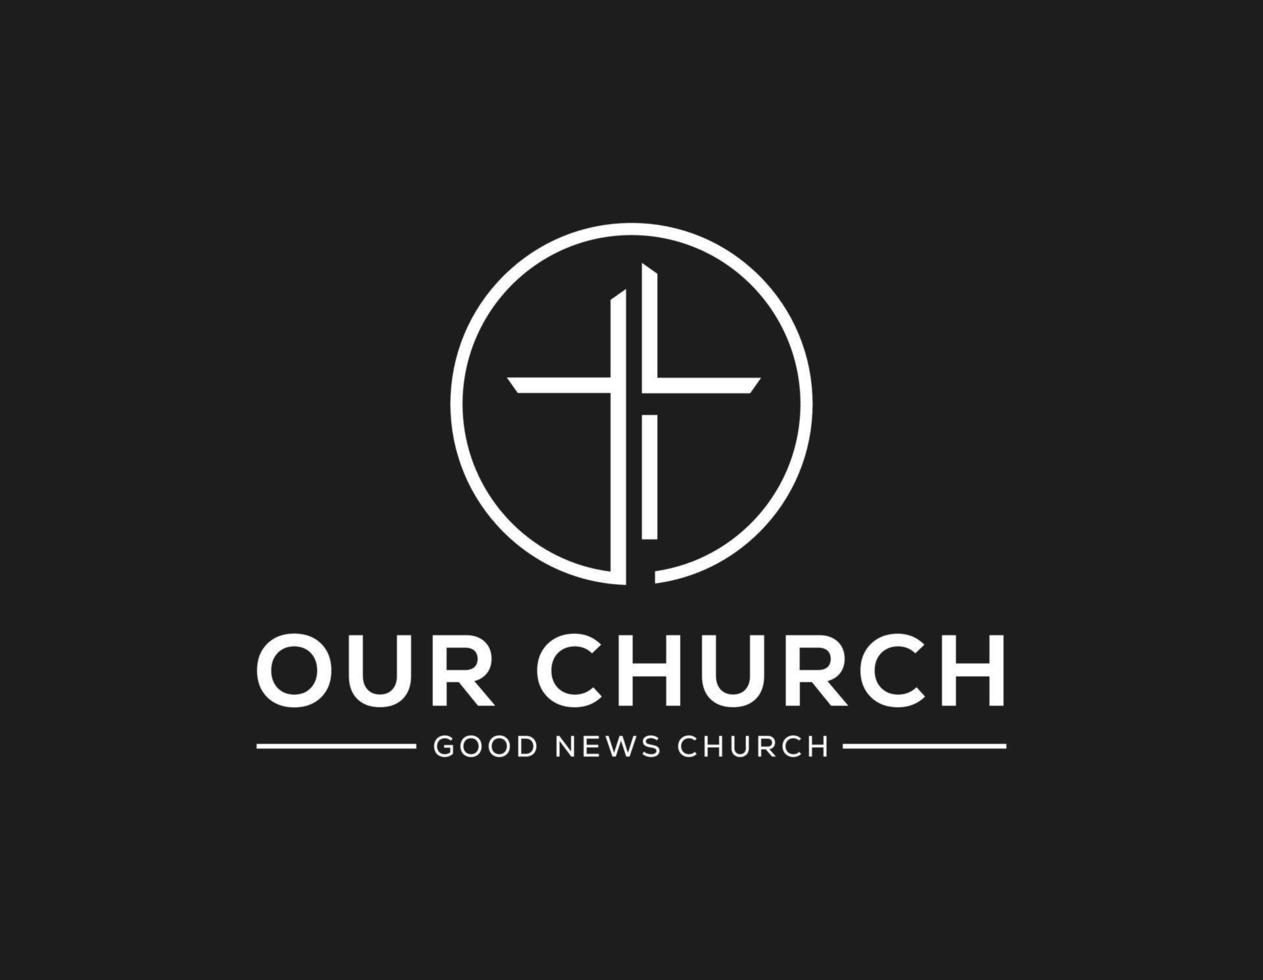 Church logo sign modern vector graphic abstract